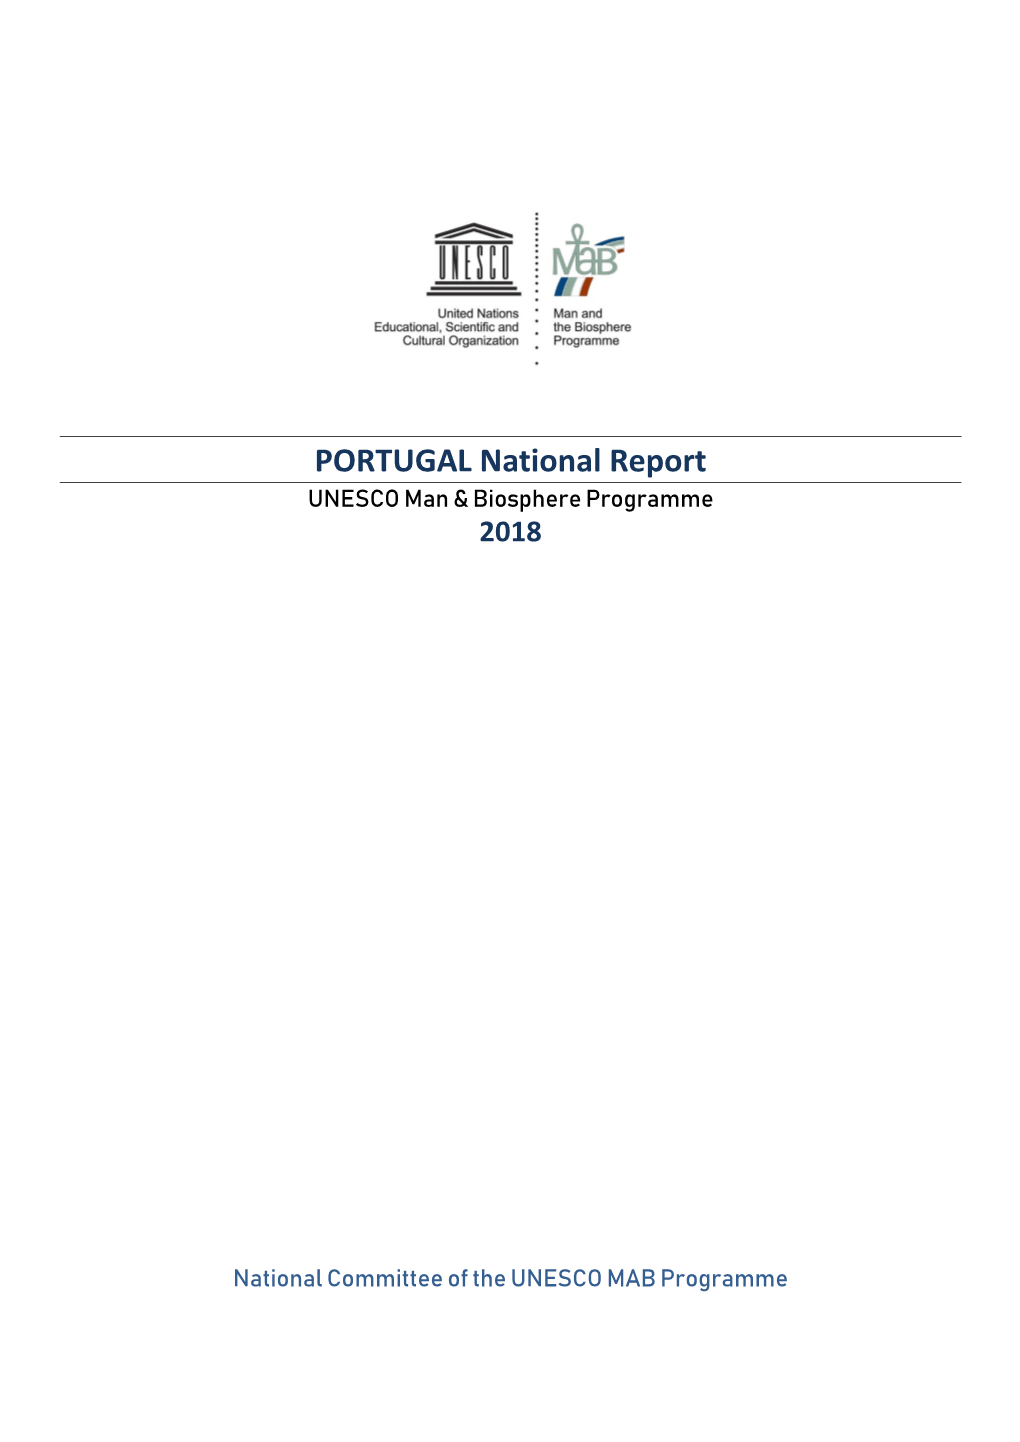 PORTUGAL National Report UNESCO Man & Biosphere Programme 2018